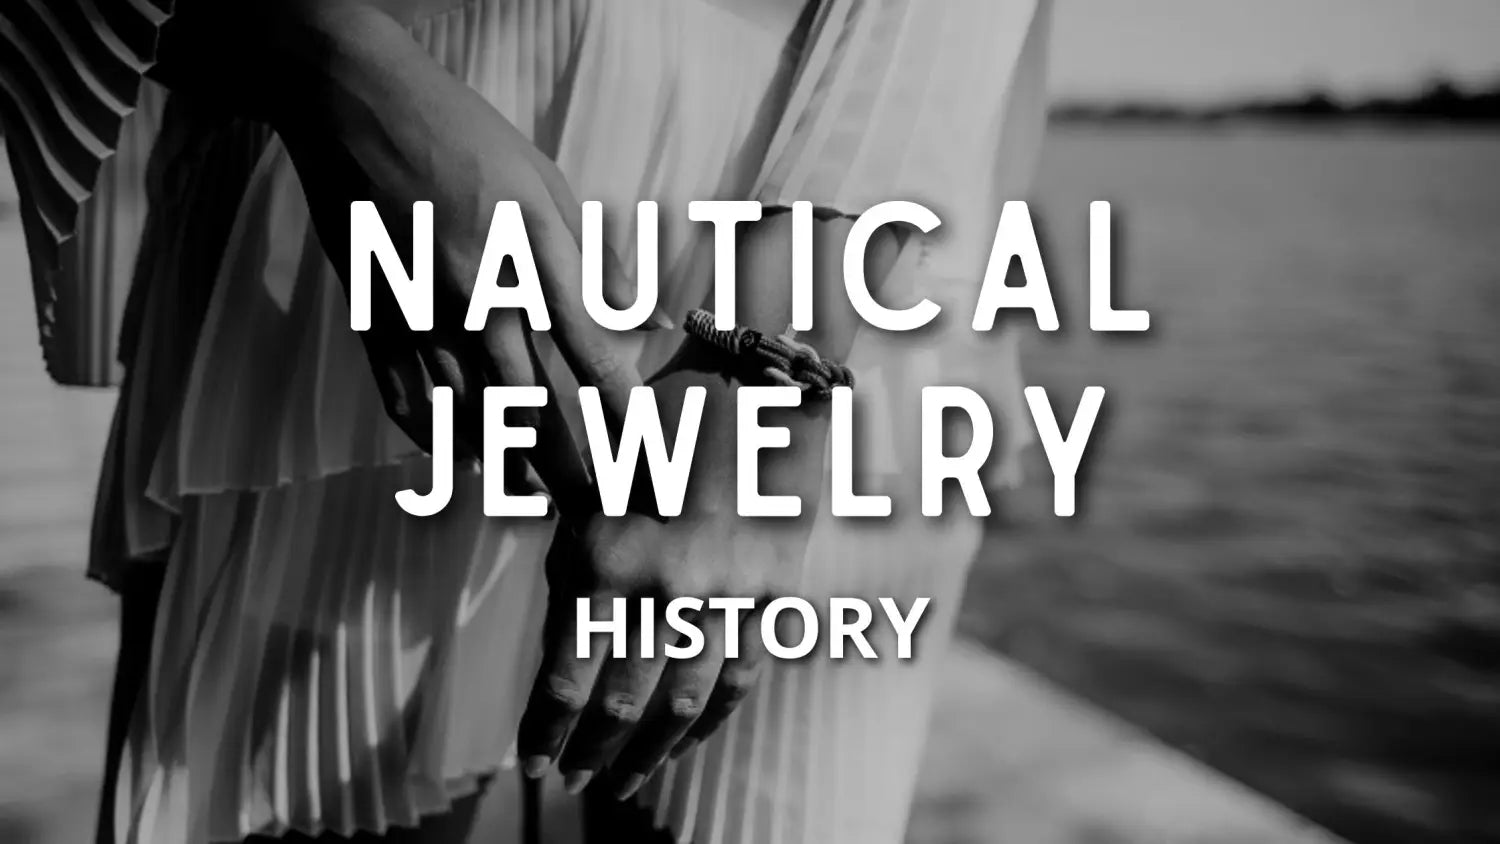 history-nautical-jewelry